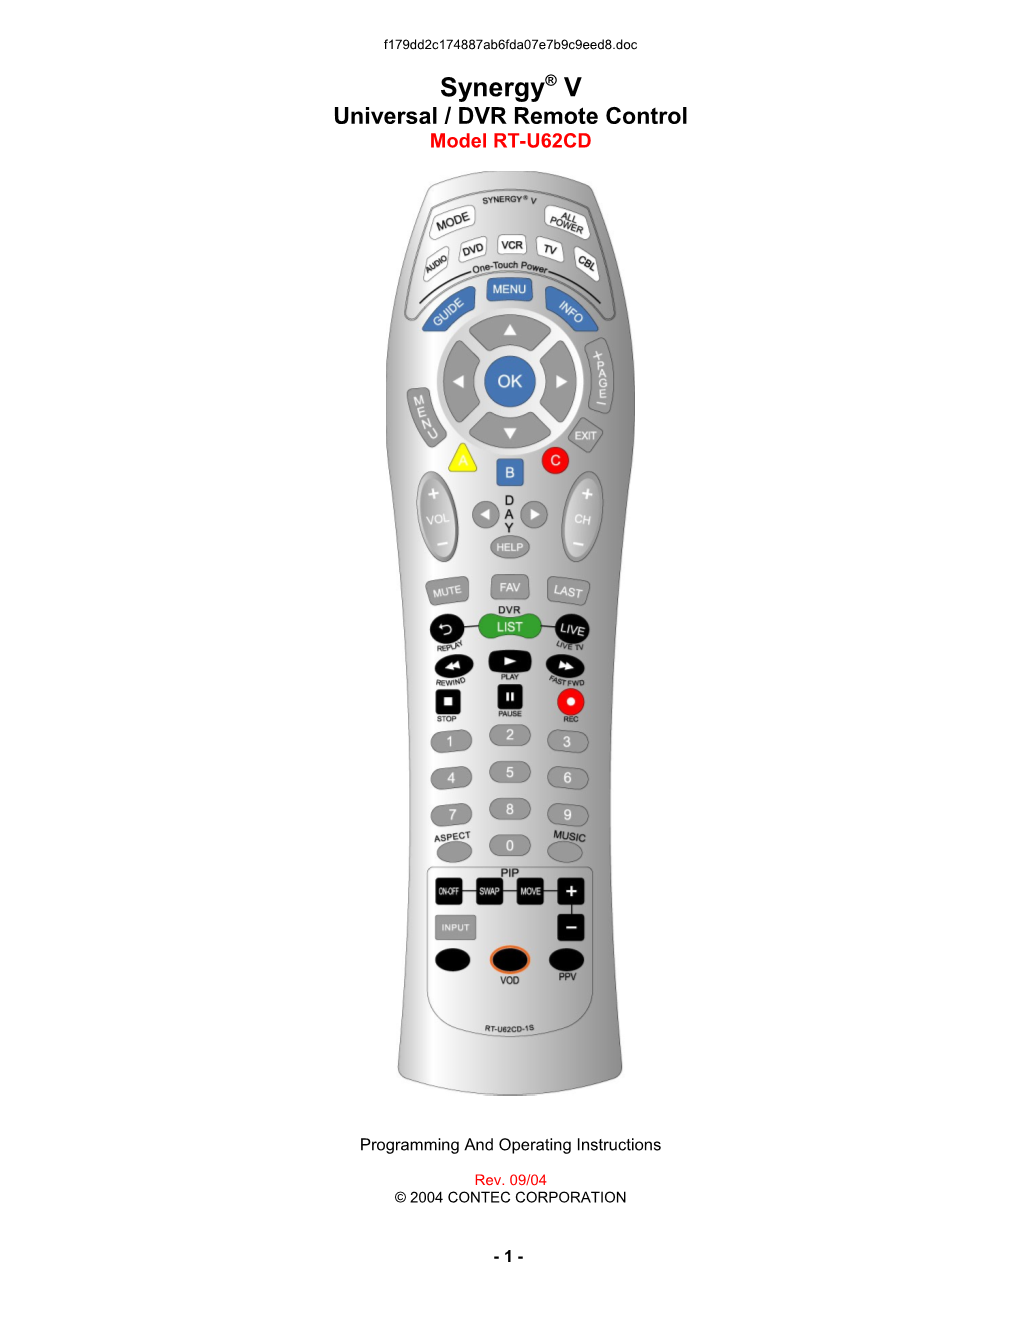 Universal / DVR Remote Control